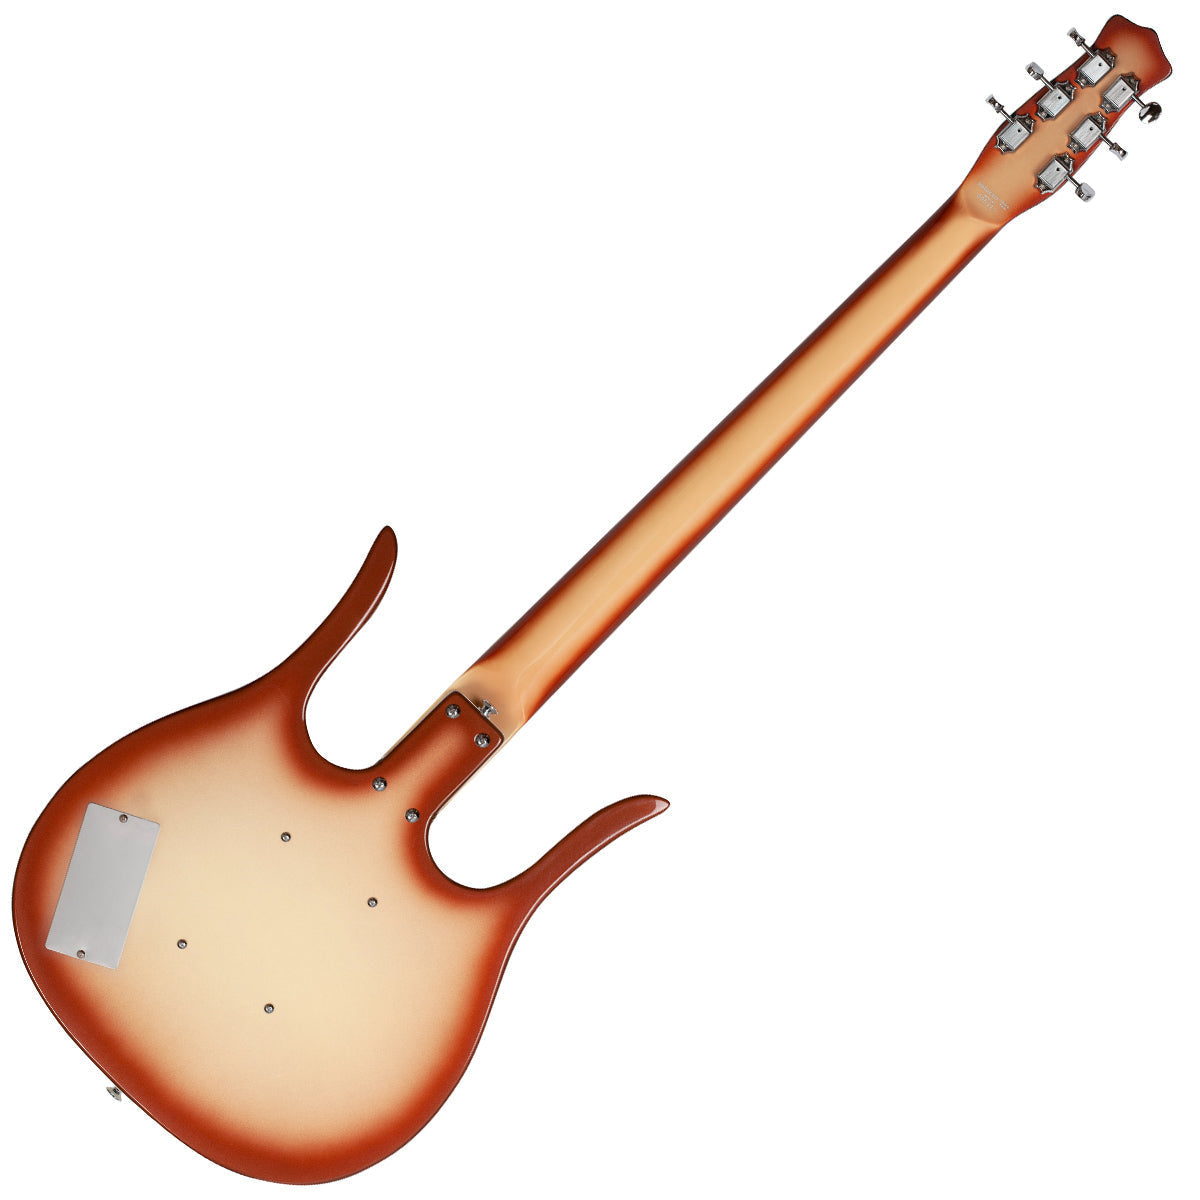 Danelectro Longhorn Baritone Electric Guitar ~ Copperburst, Electric Guitar for sale at Richards Guitars.